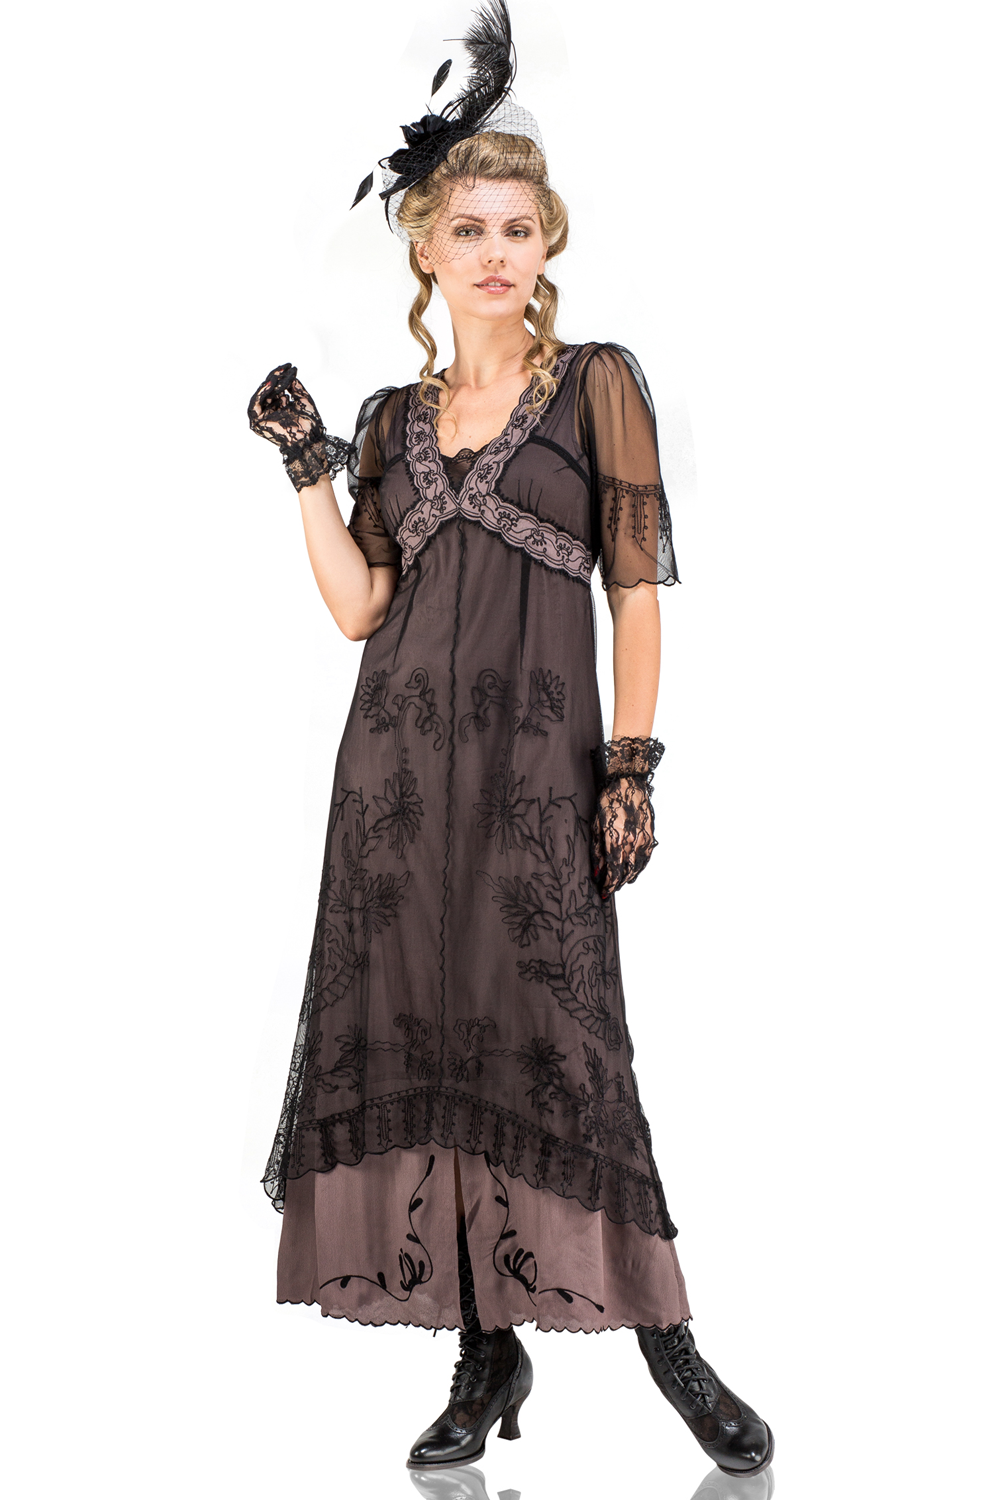 Edwardian Fashion, Clothing & Costumes 1900 – 1910s New Vintage Titanic Tea Party Dress in Black-Coco by Nataya $249.00 AT vintagedancer.com